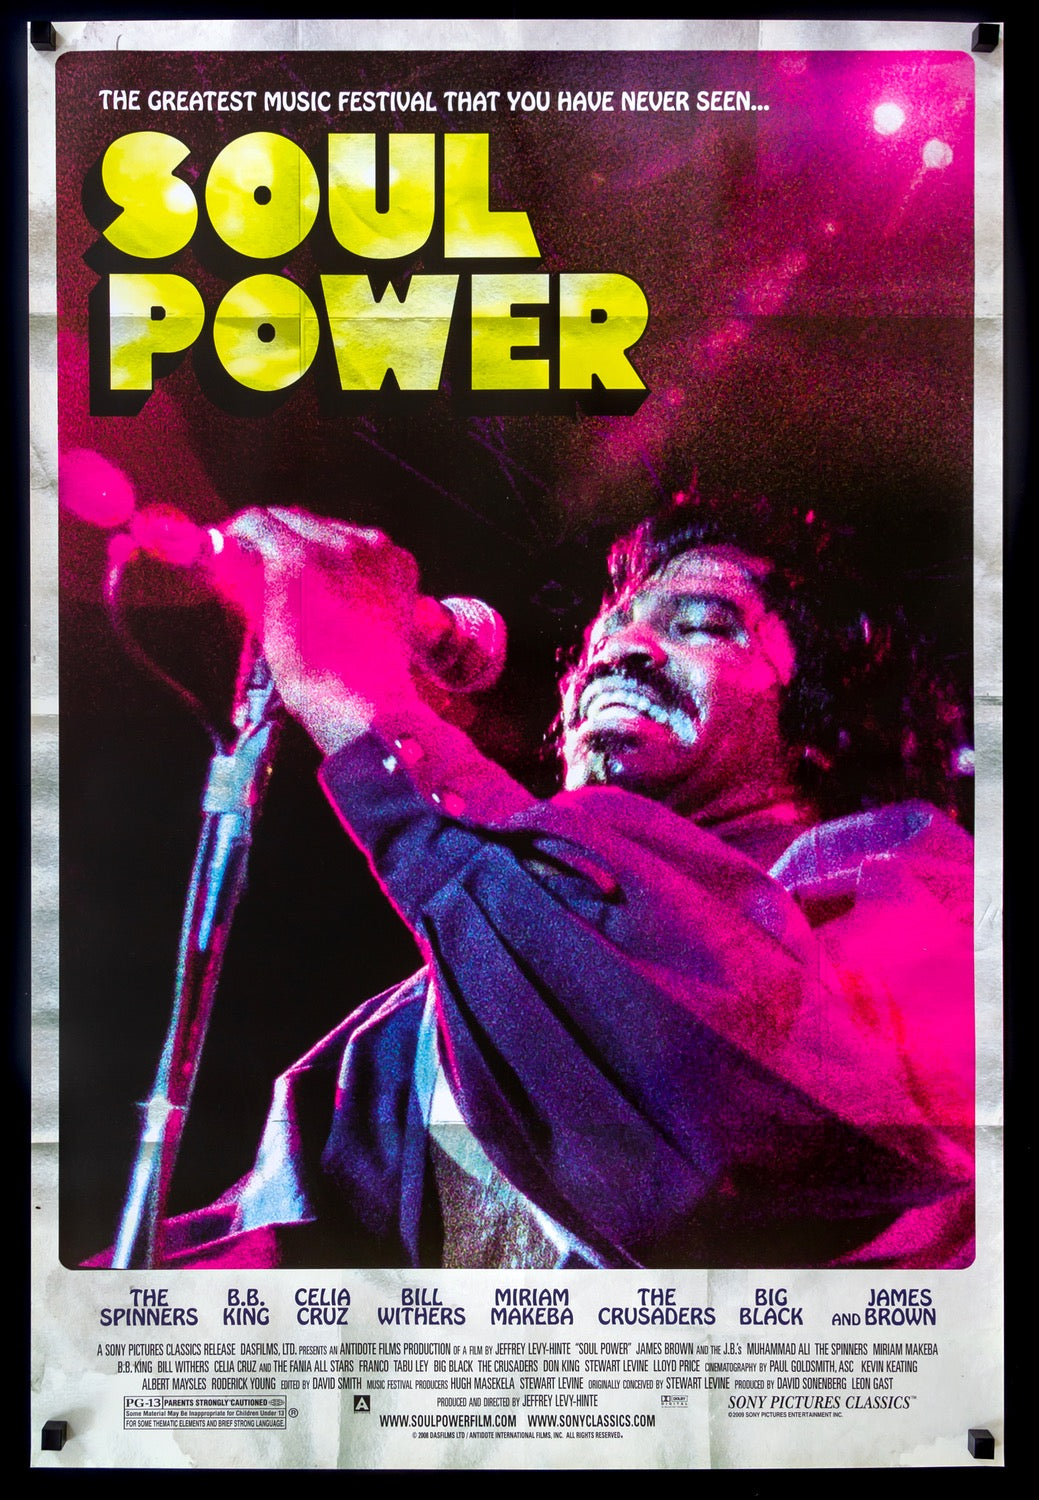 Soul Power (2008) original movie poster for sale at Original Film Art